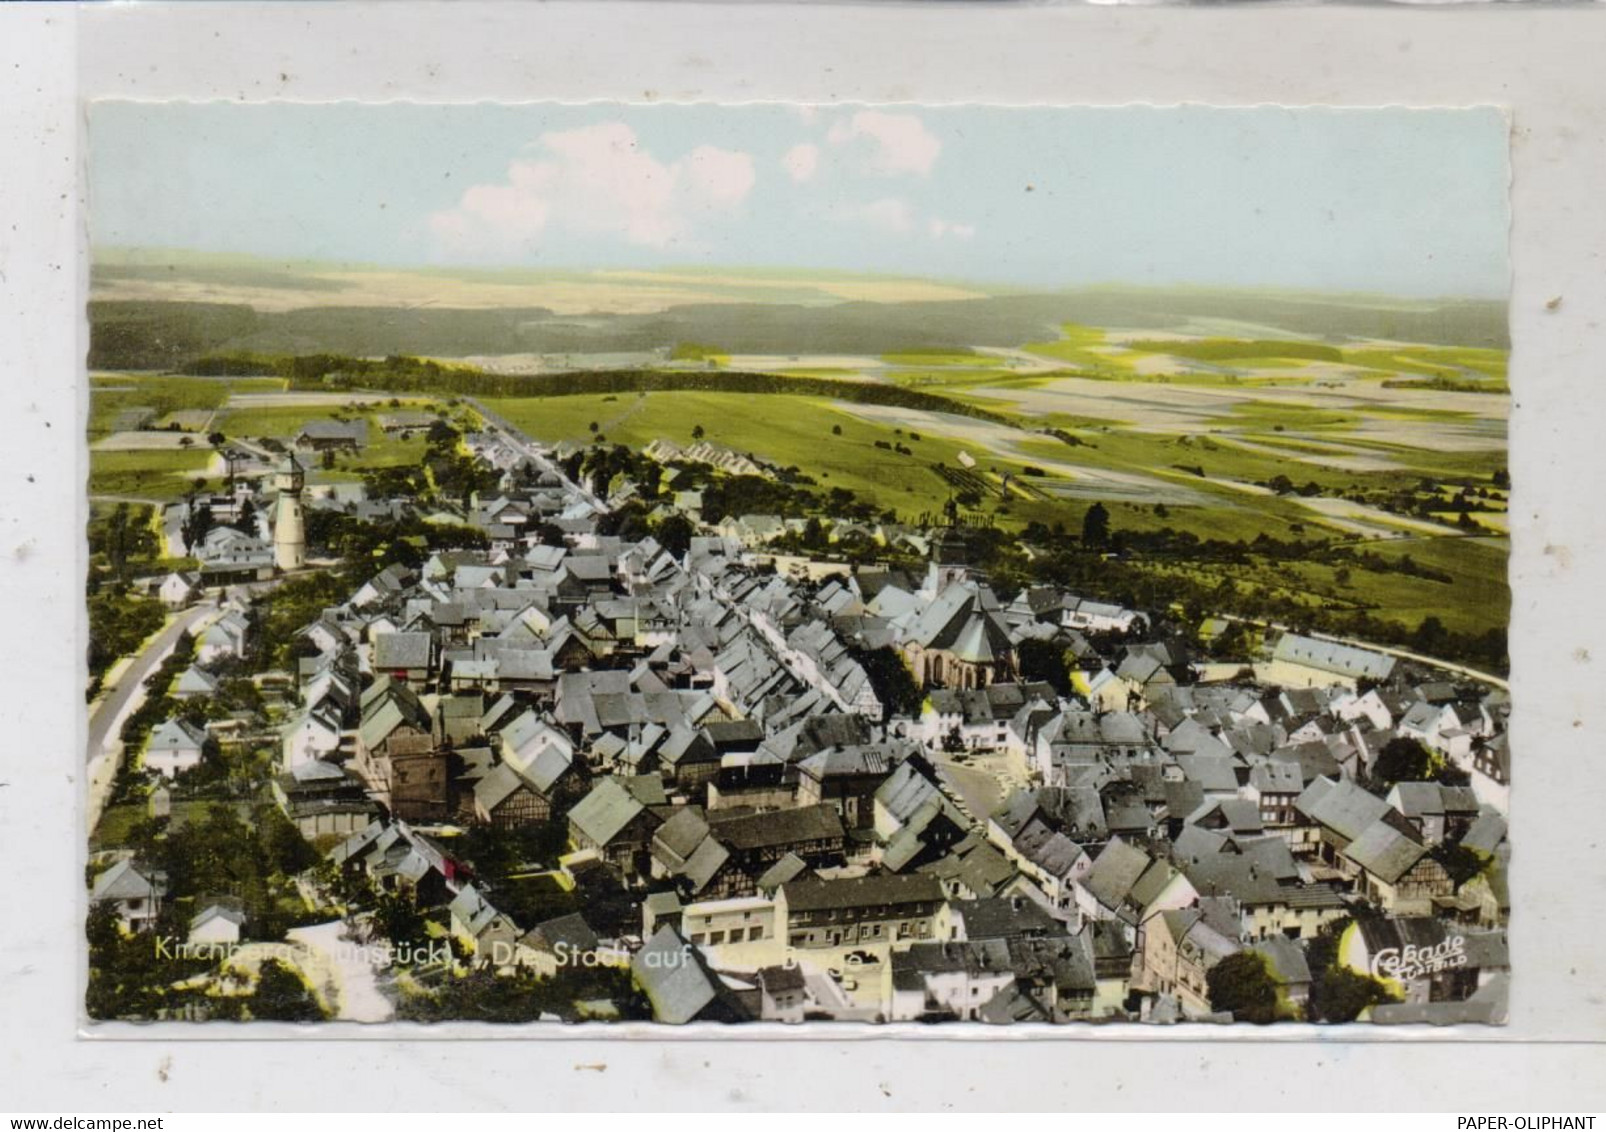 6544 KIRCHBERG, Luftaufnahme, 1964, Handcoloriert - Rhein-Hunsrück-Kreis